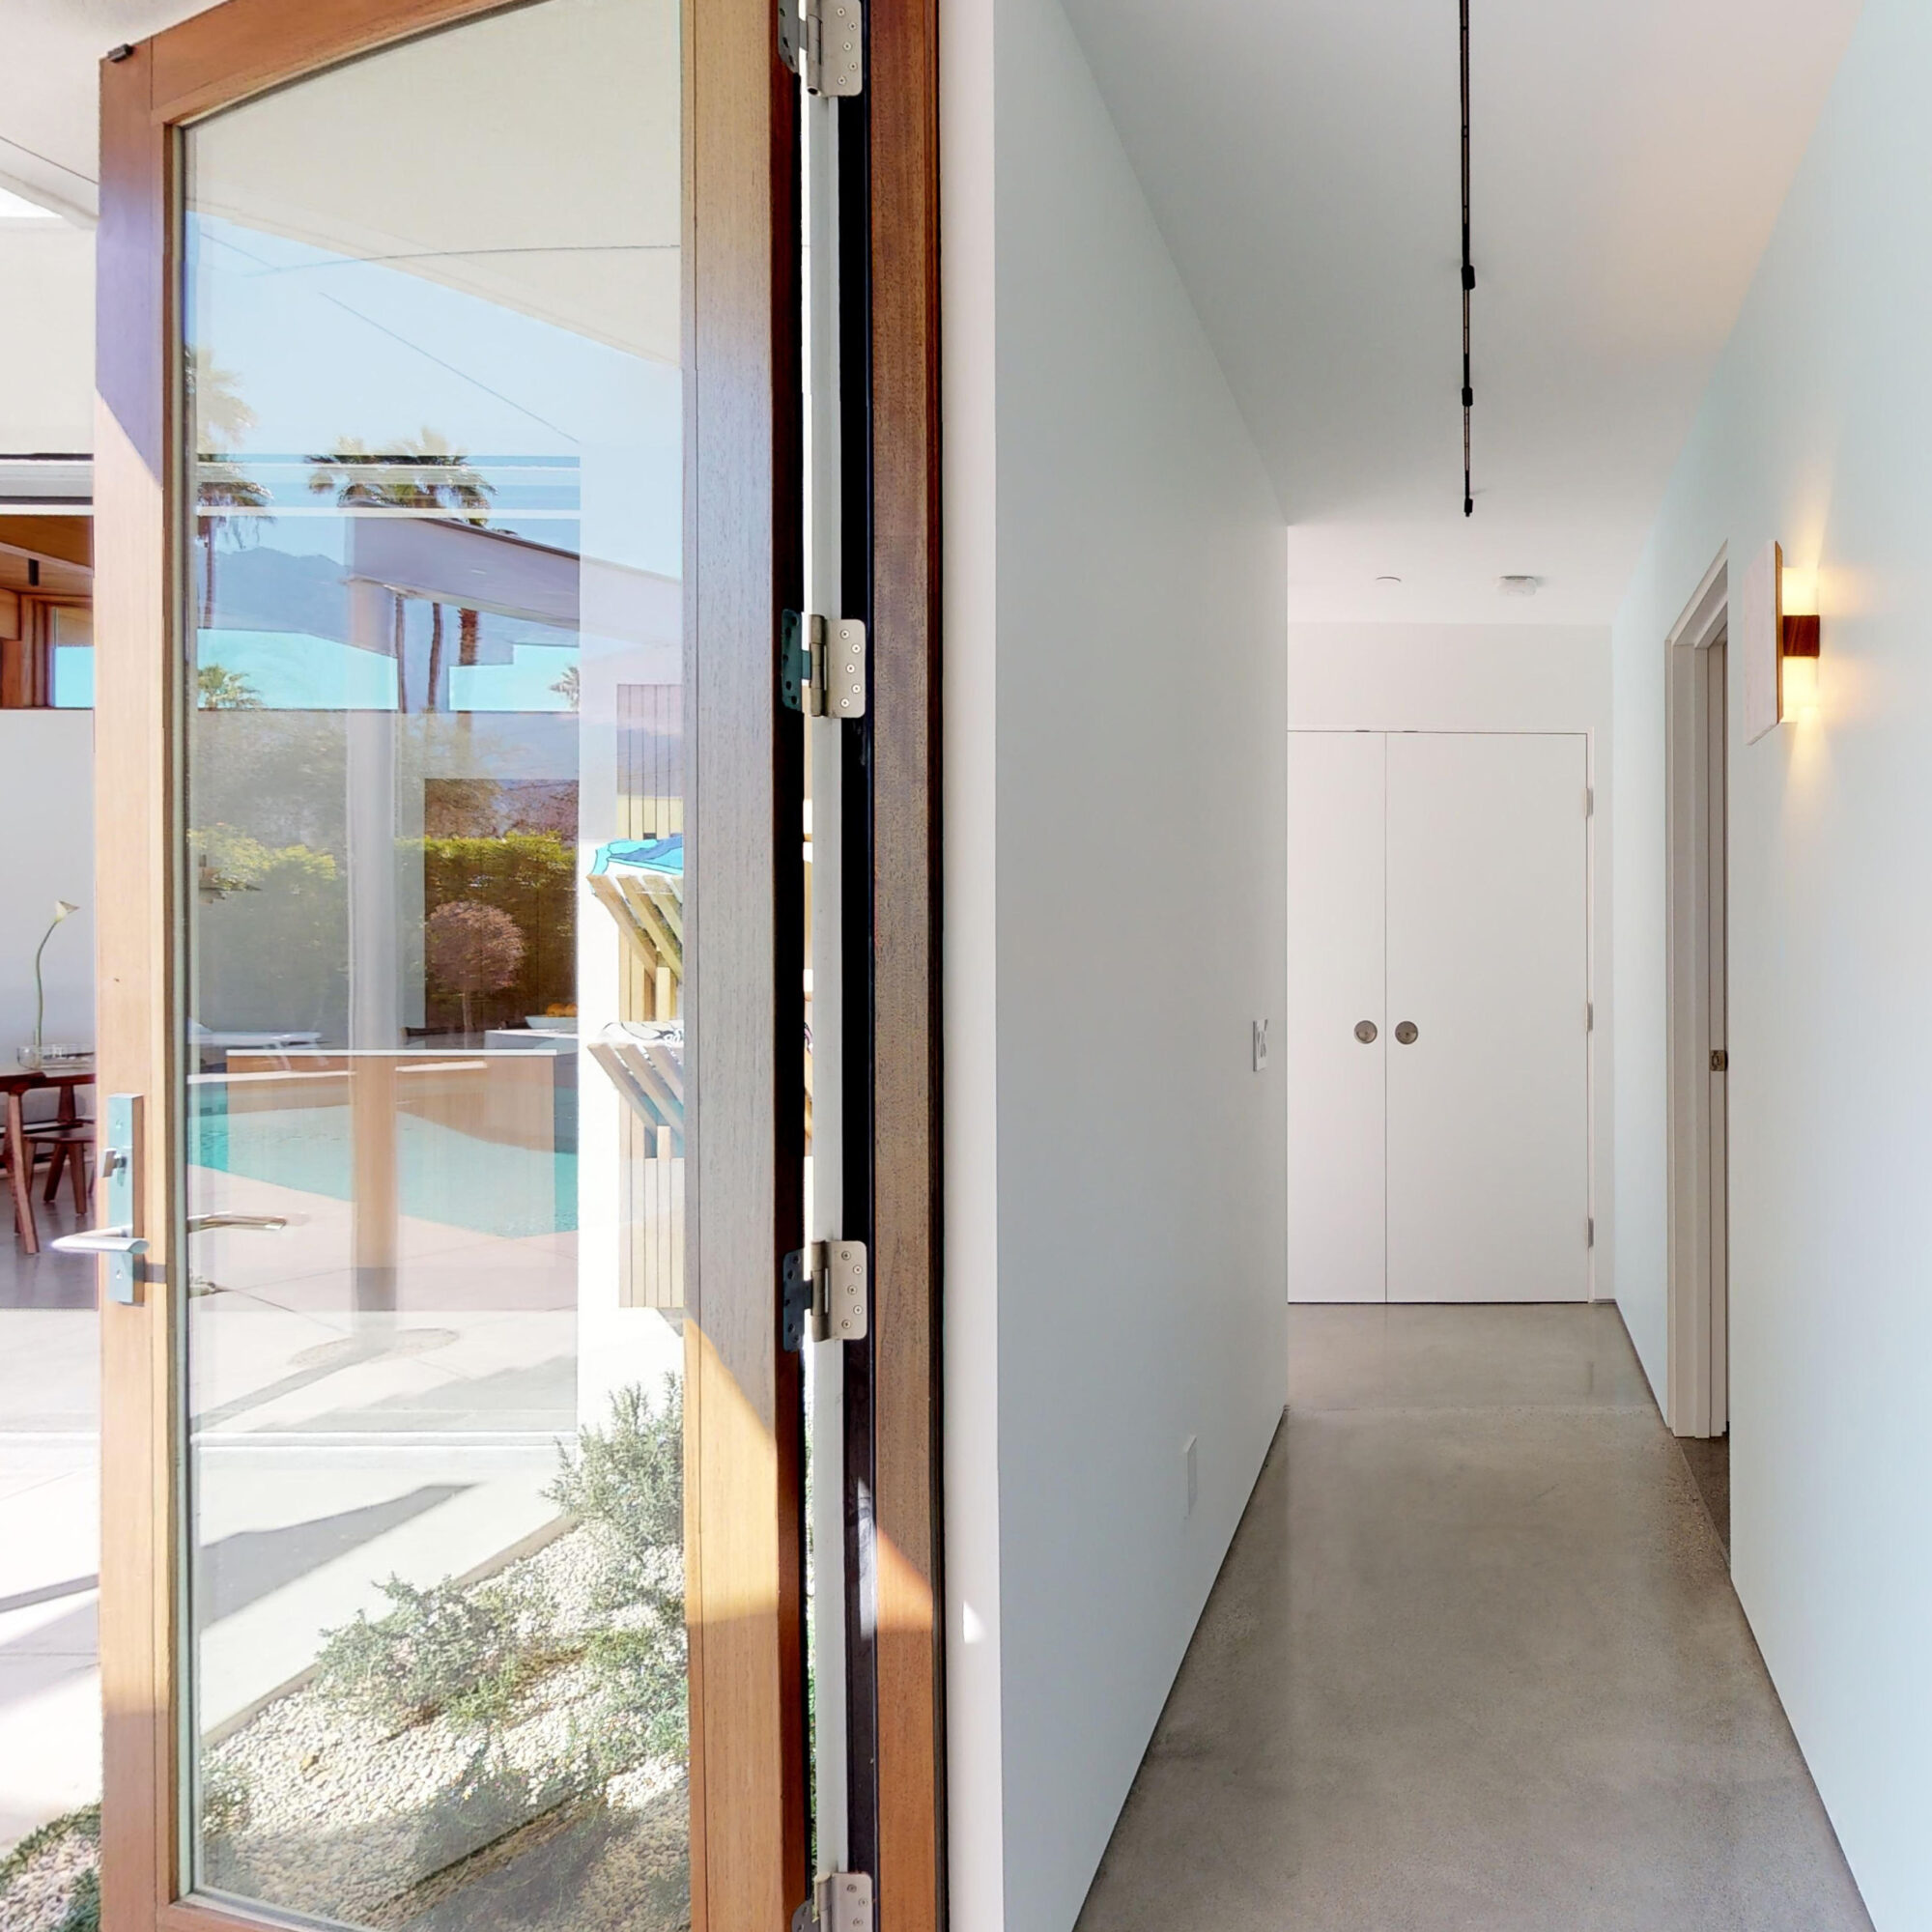 Reference Axiom Desert House | Karcher Design